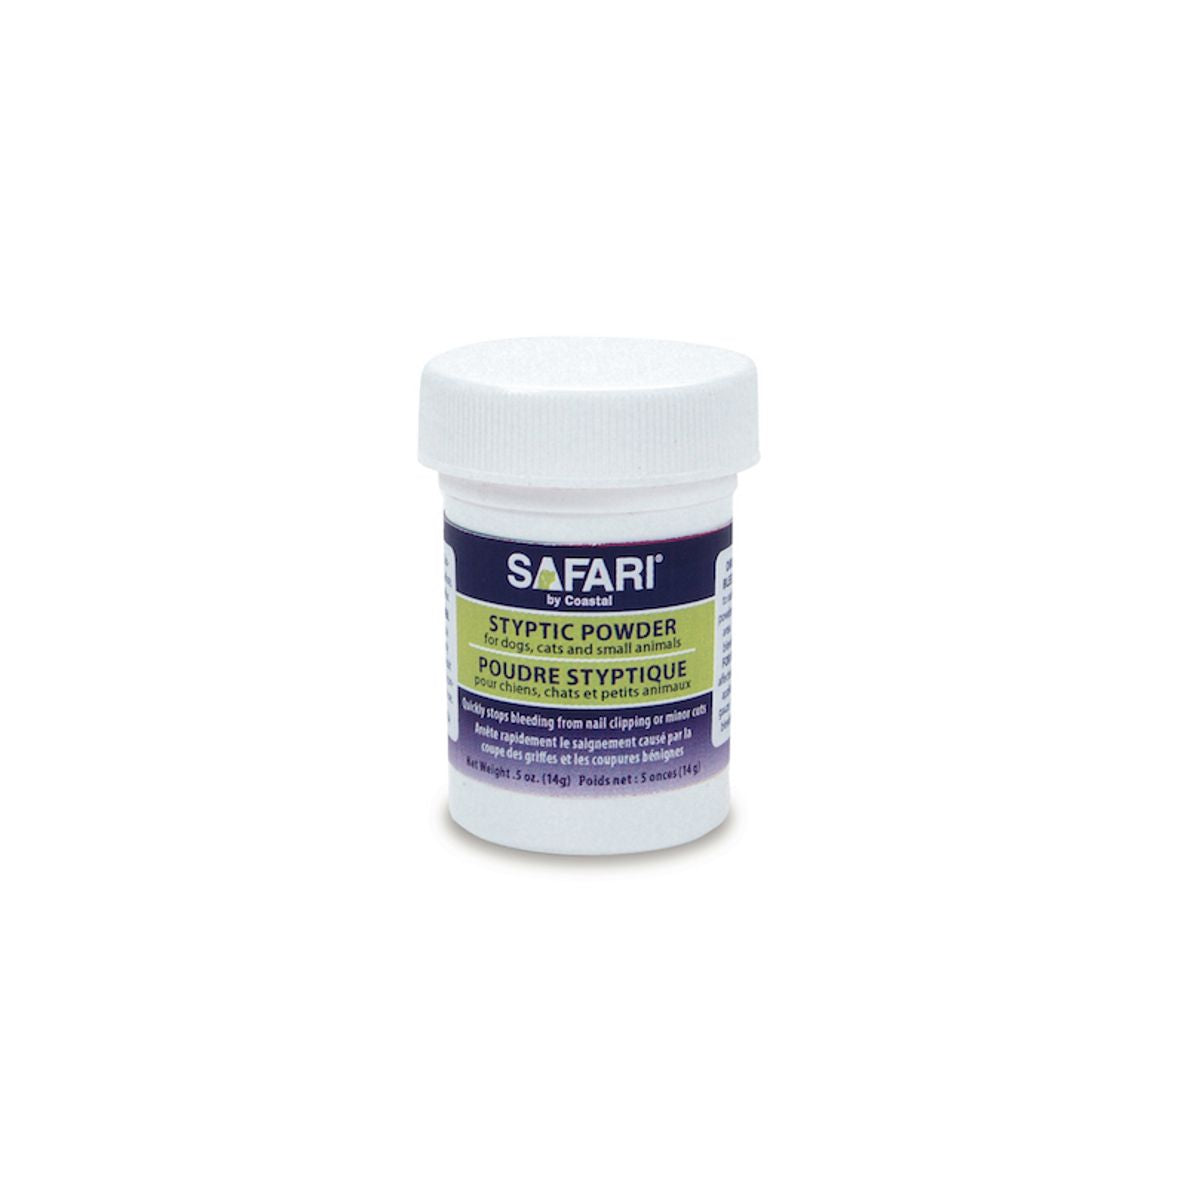 Safari® Styptic Powder | Pawlicious & Company